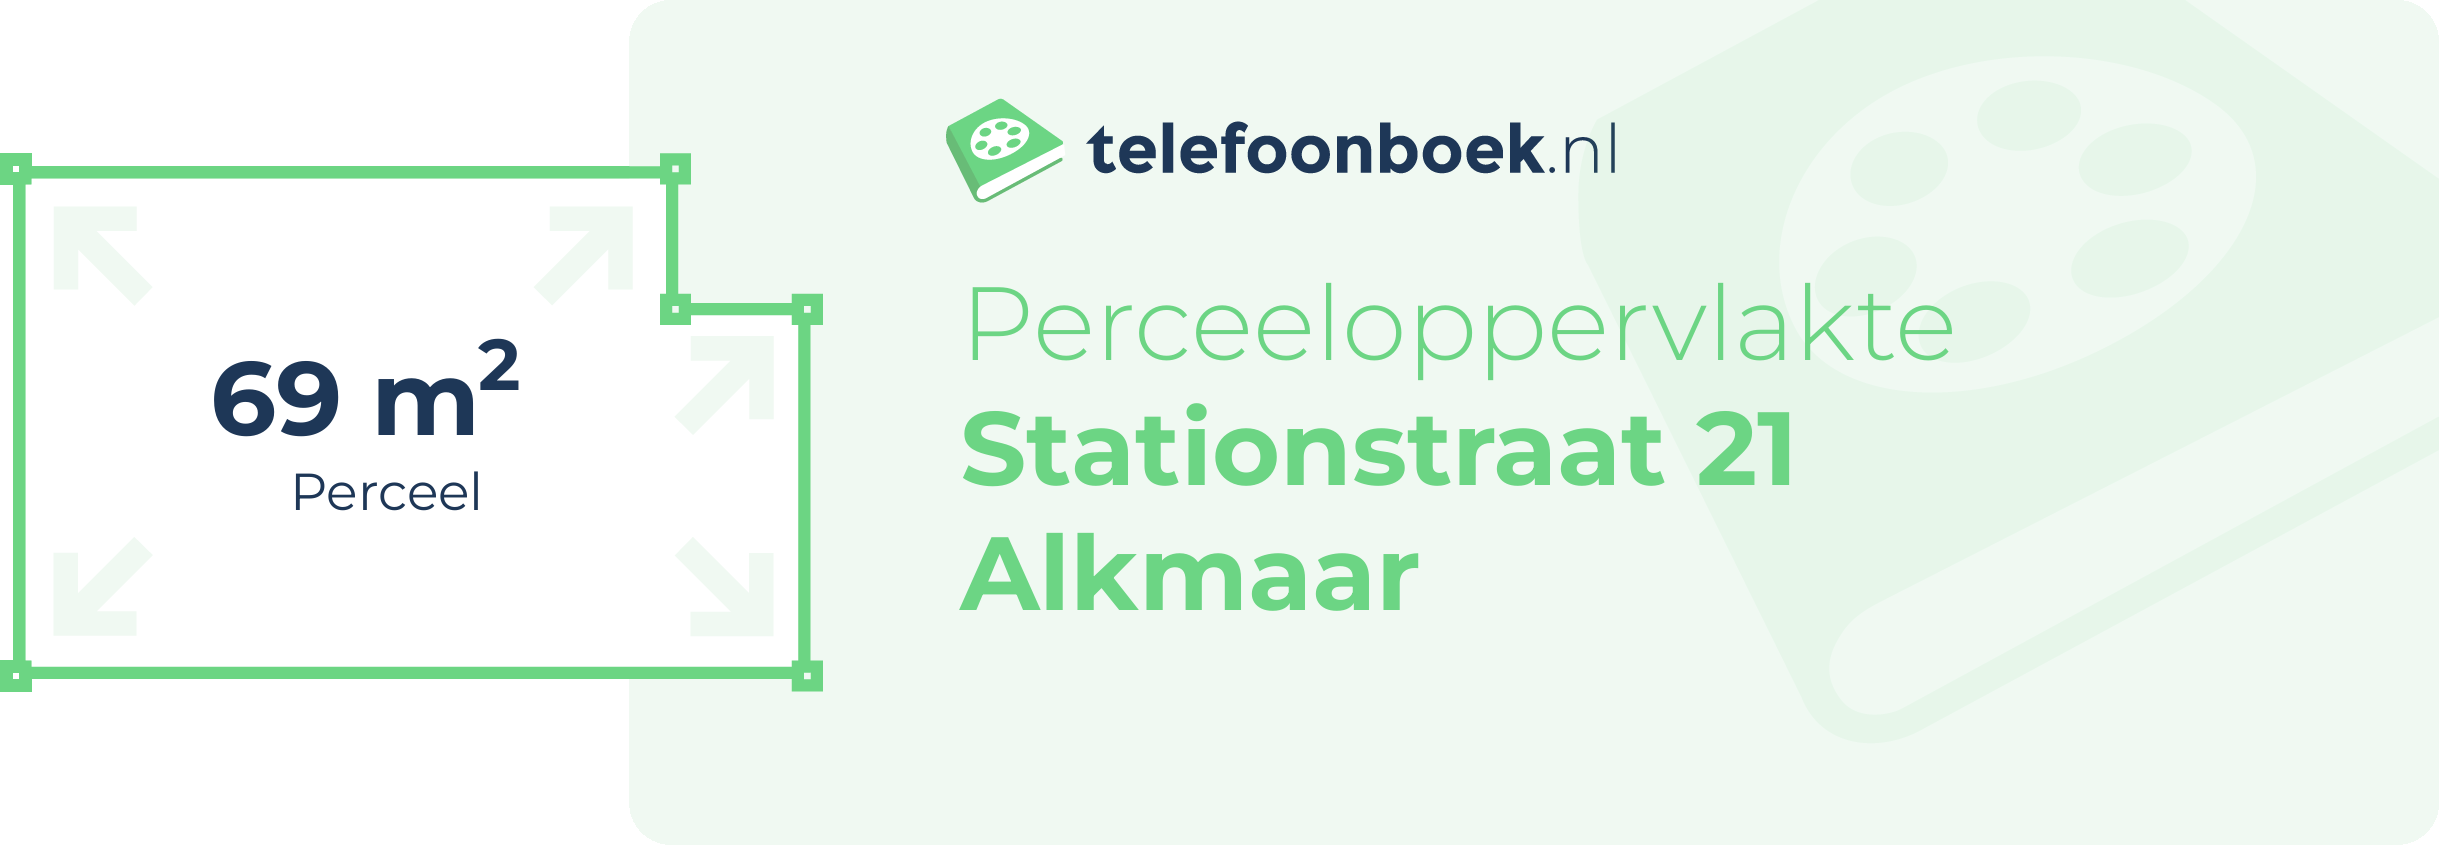 Perceeloppervlakte Stationstraat 21 Alkmaar